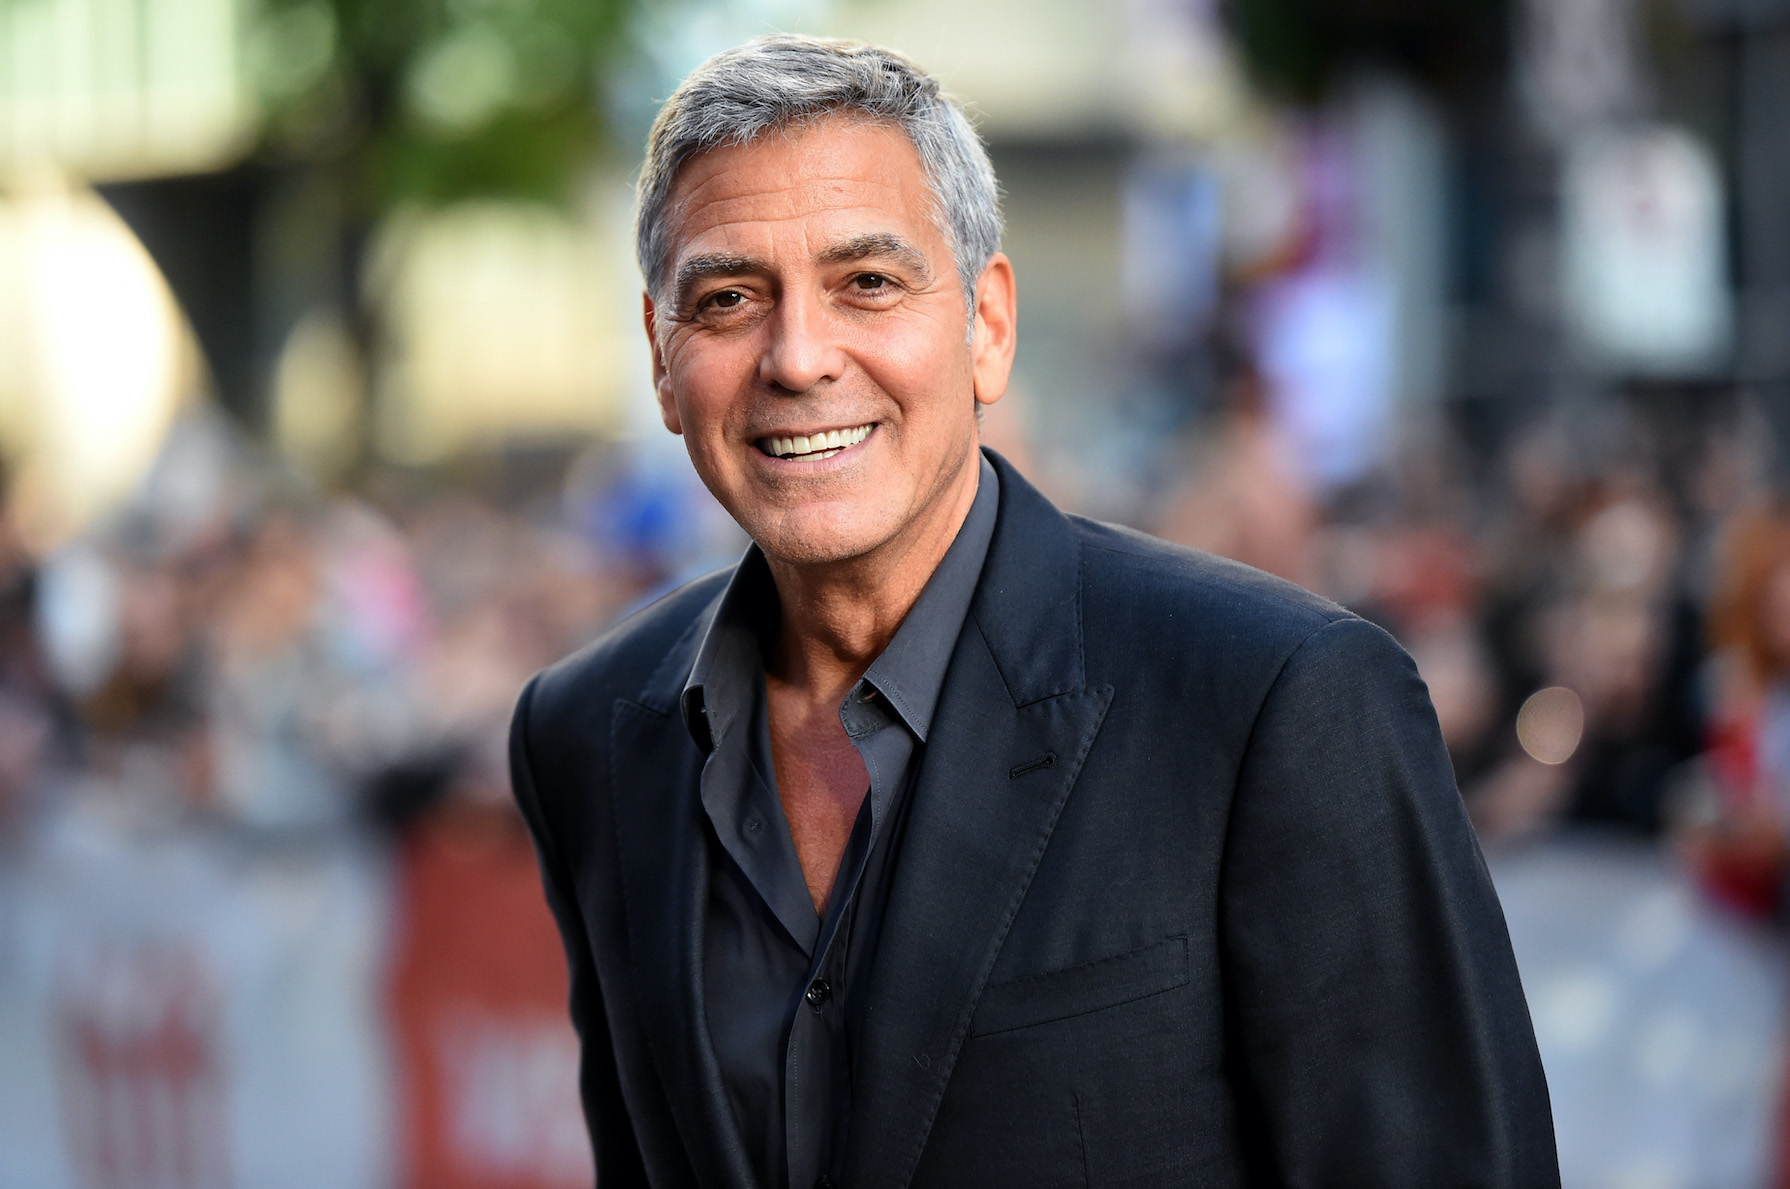 George Clooney at the 2017 Toronto International Film Festival